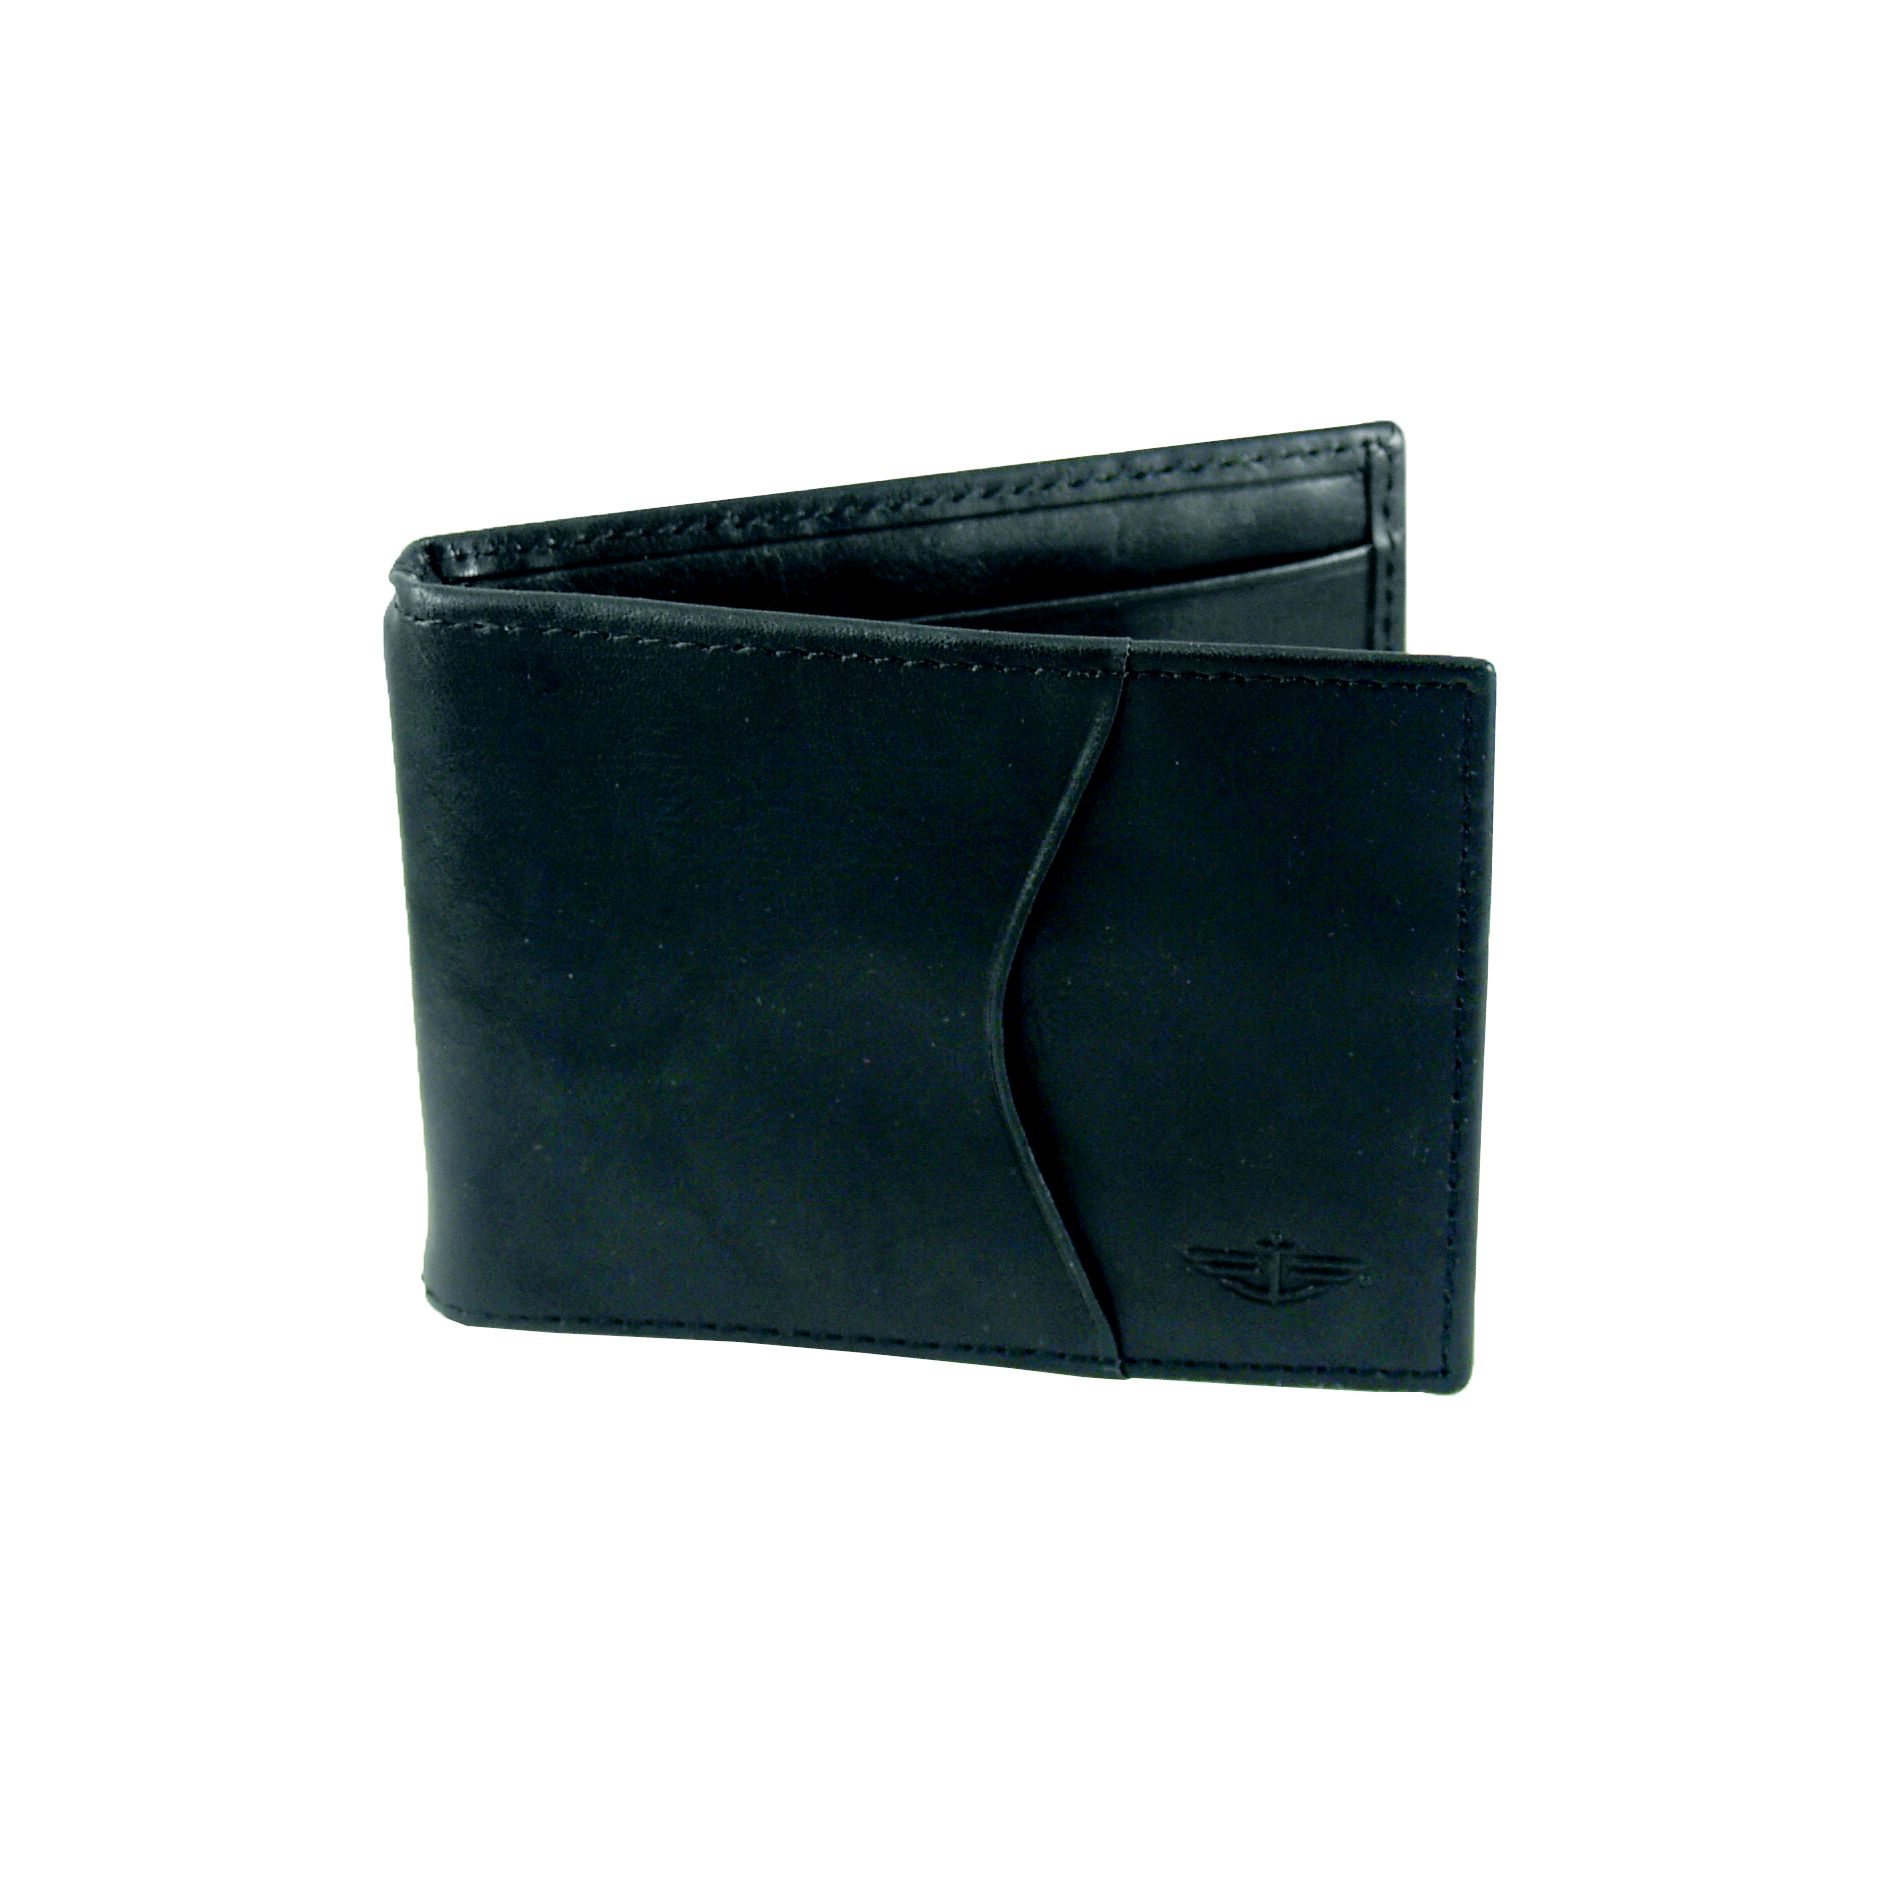 Dockers Leather Front Pocket Wallet